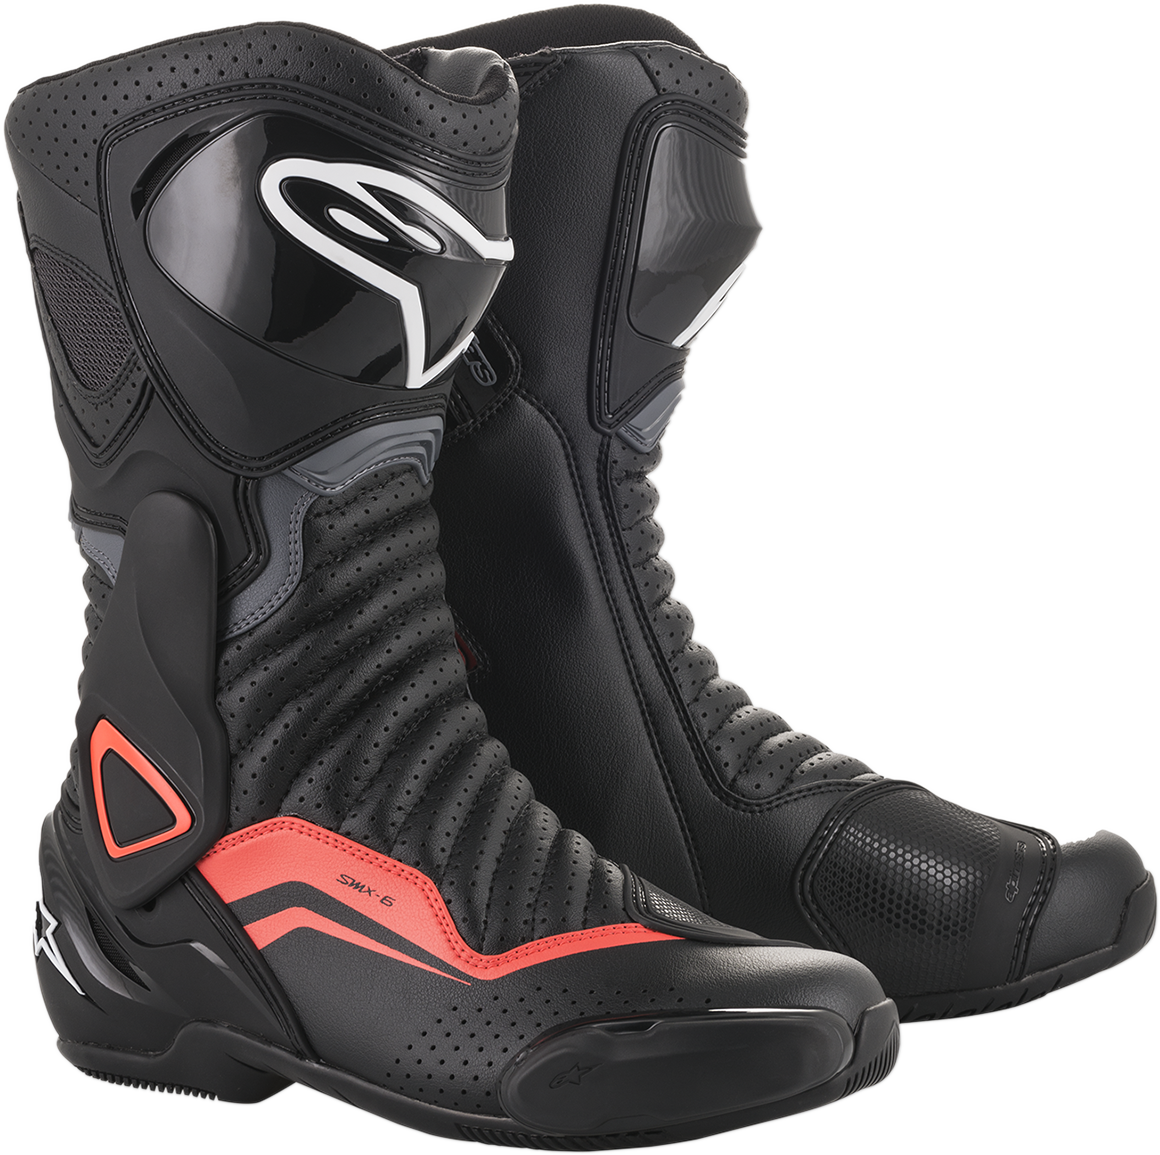 ALPINESTARS SMX-6 v2 Vented Boots - Black/Gray/Red - US 7.5 / EU 41 2223017-1133-41